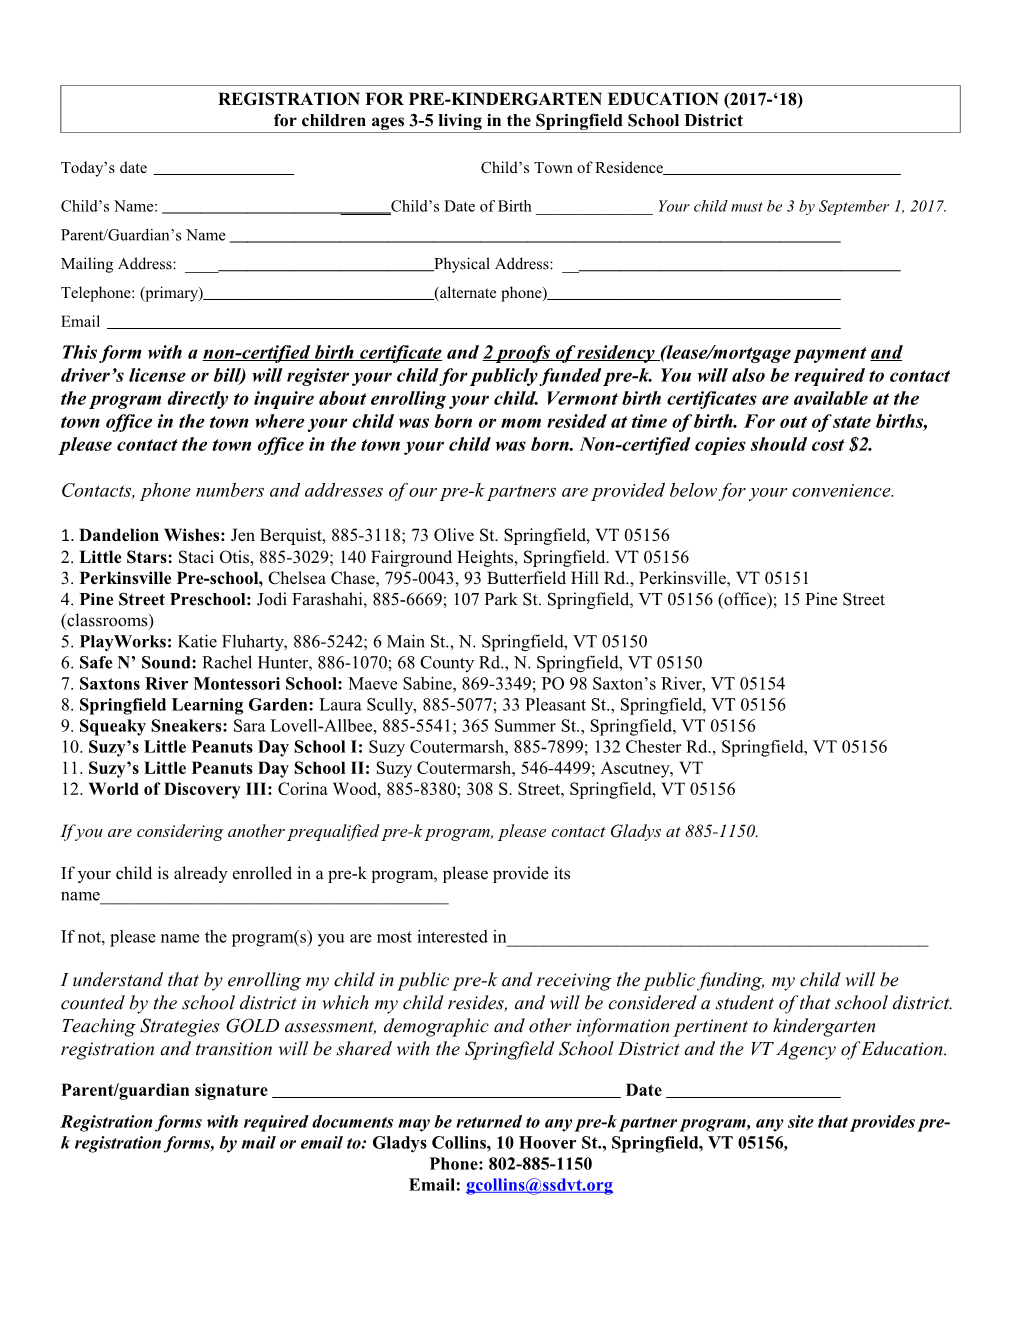 Registration for Pre-Kindergarten Education (2017- 18)